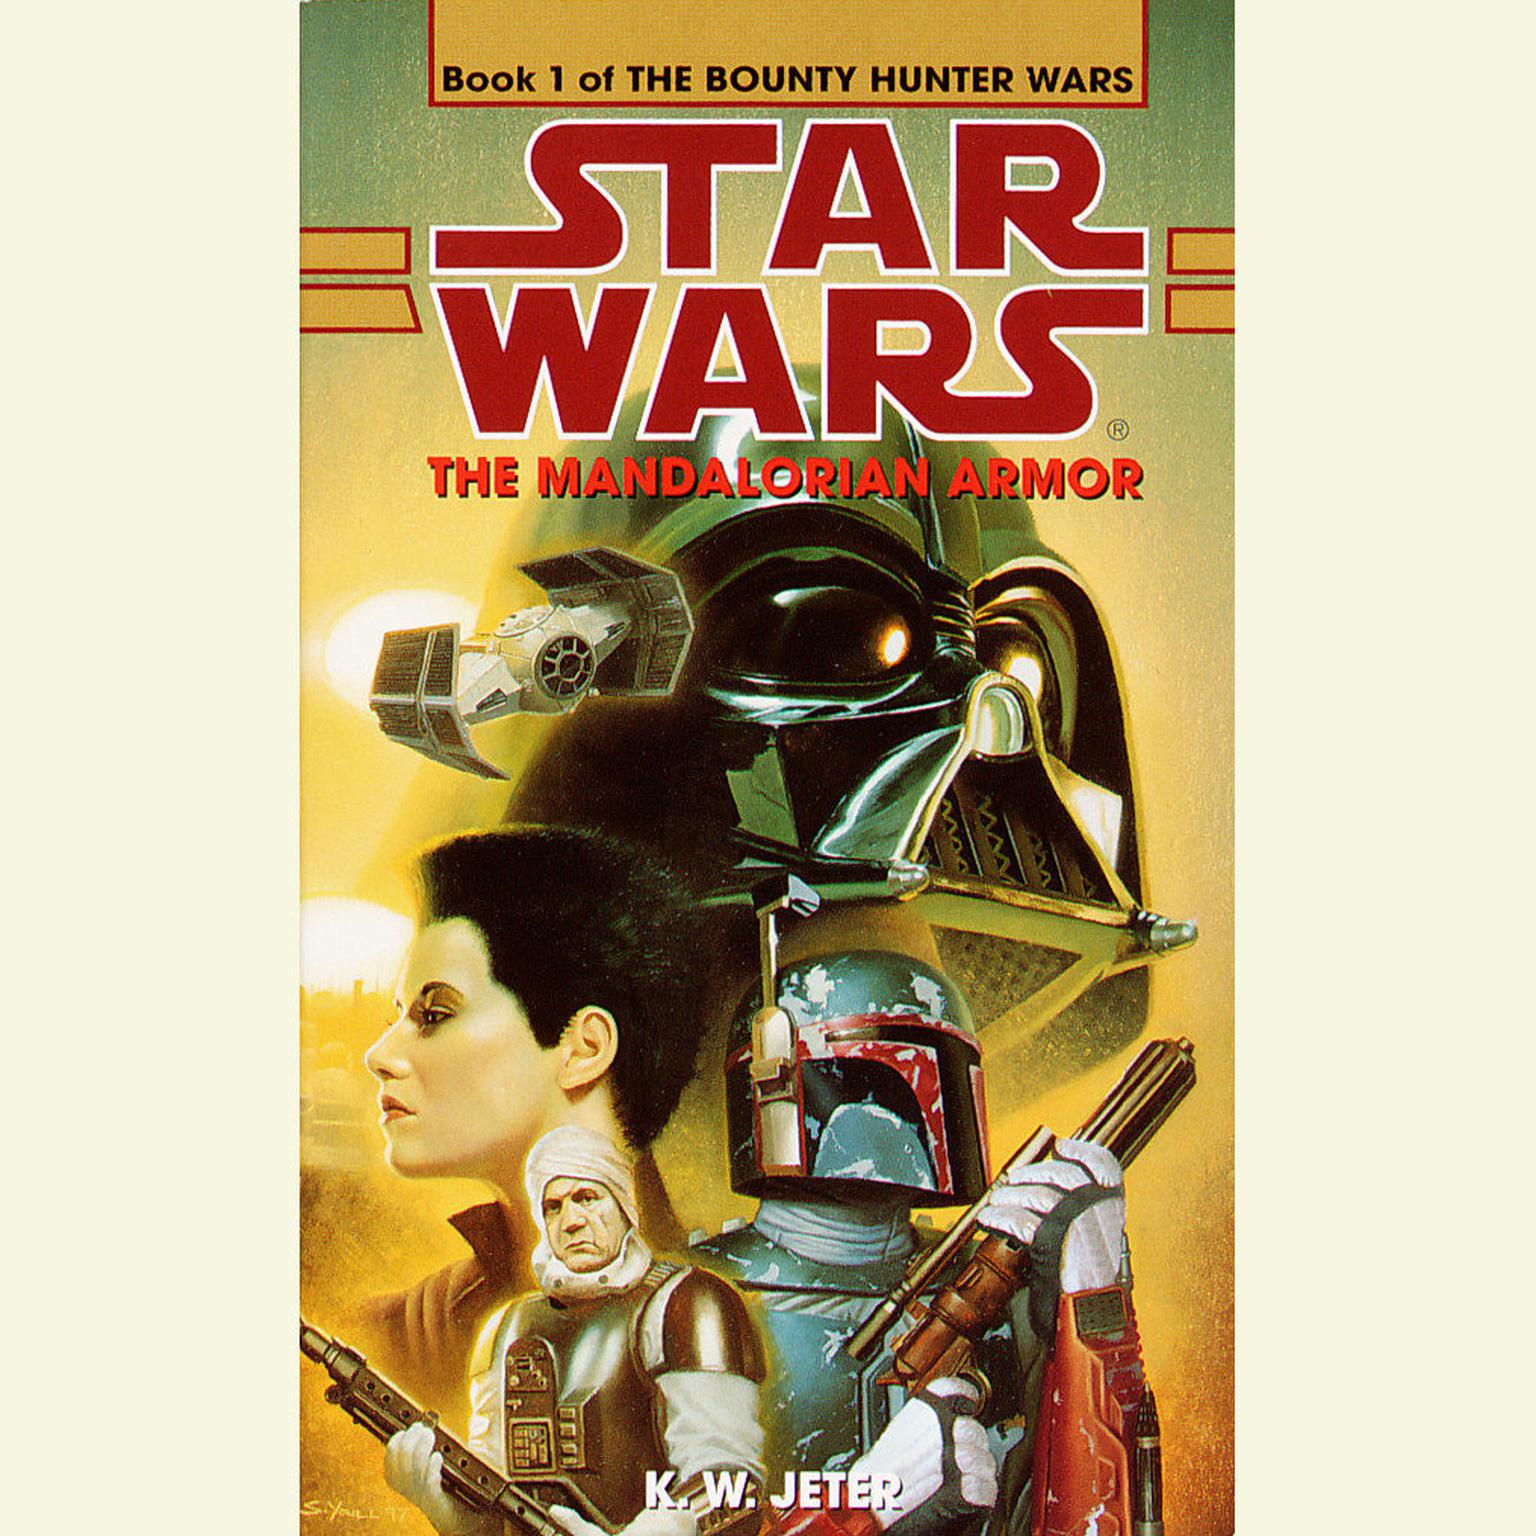 Star Wars: The Bounty Hunter Wars: The Mandalorian Armor (Abridged): Book 1 Audiobook, by K. W. Jeter